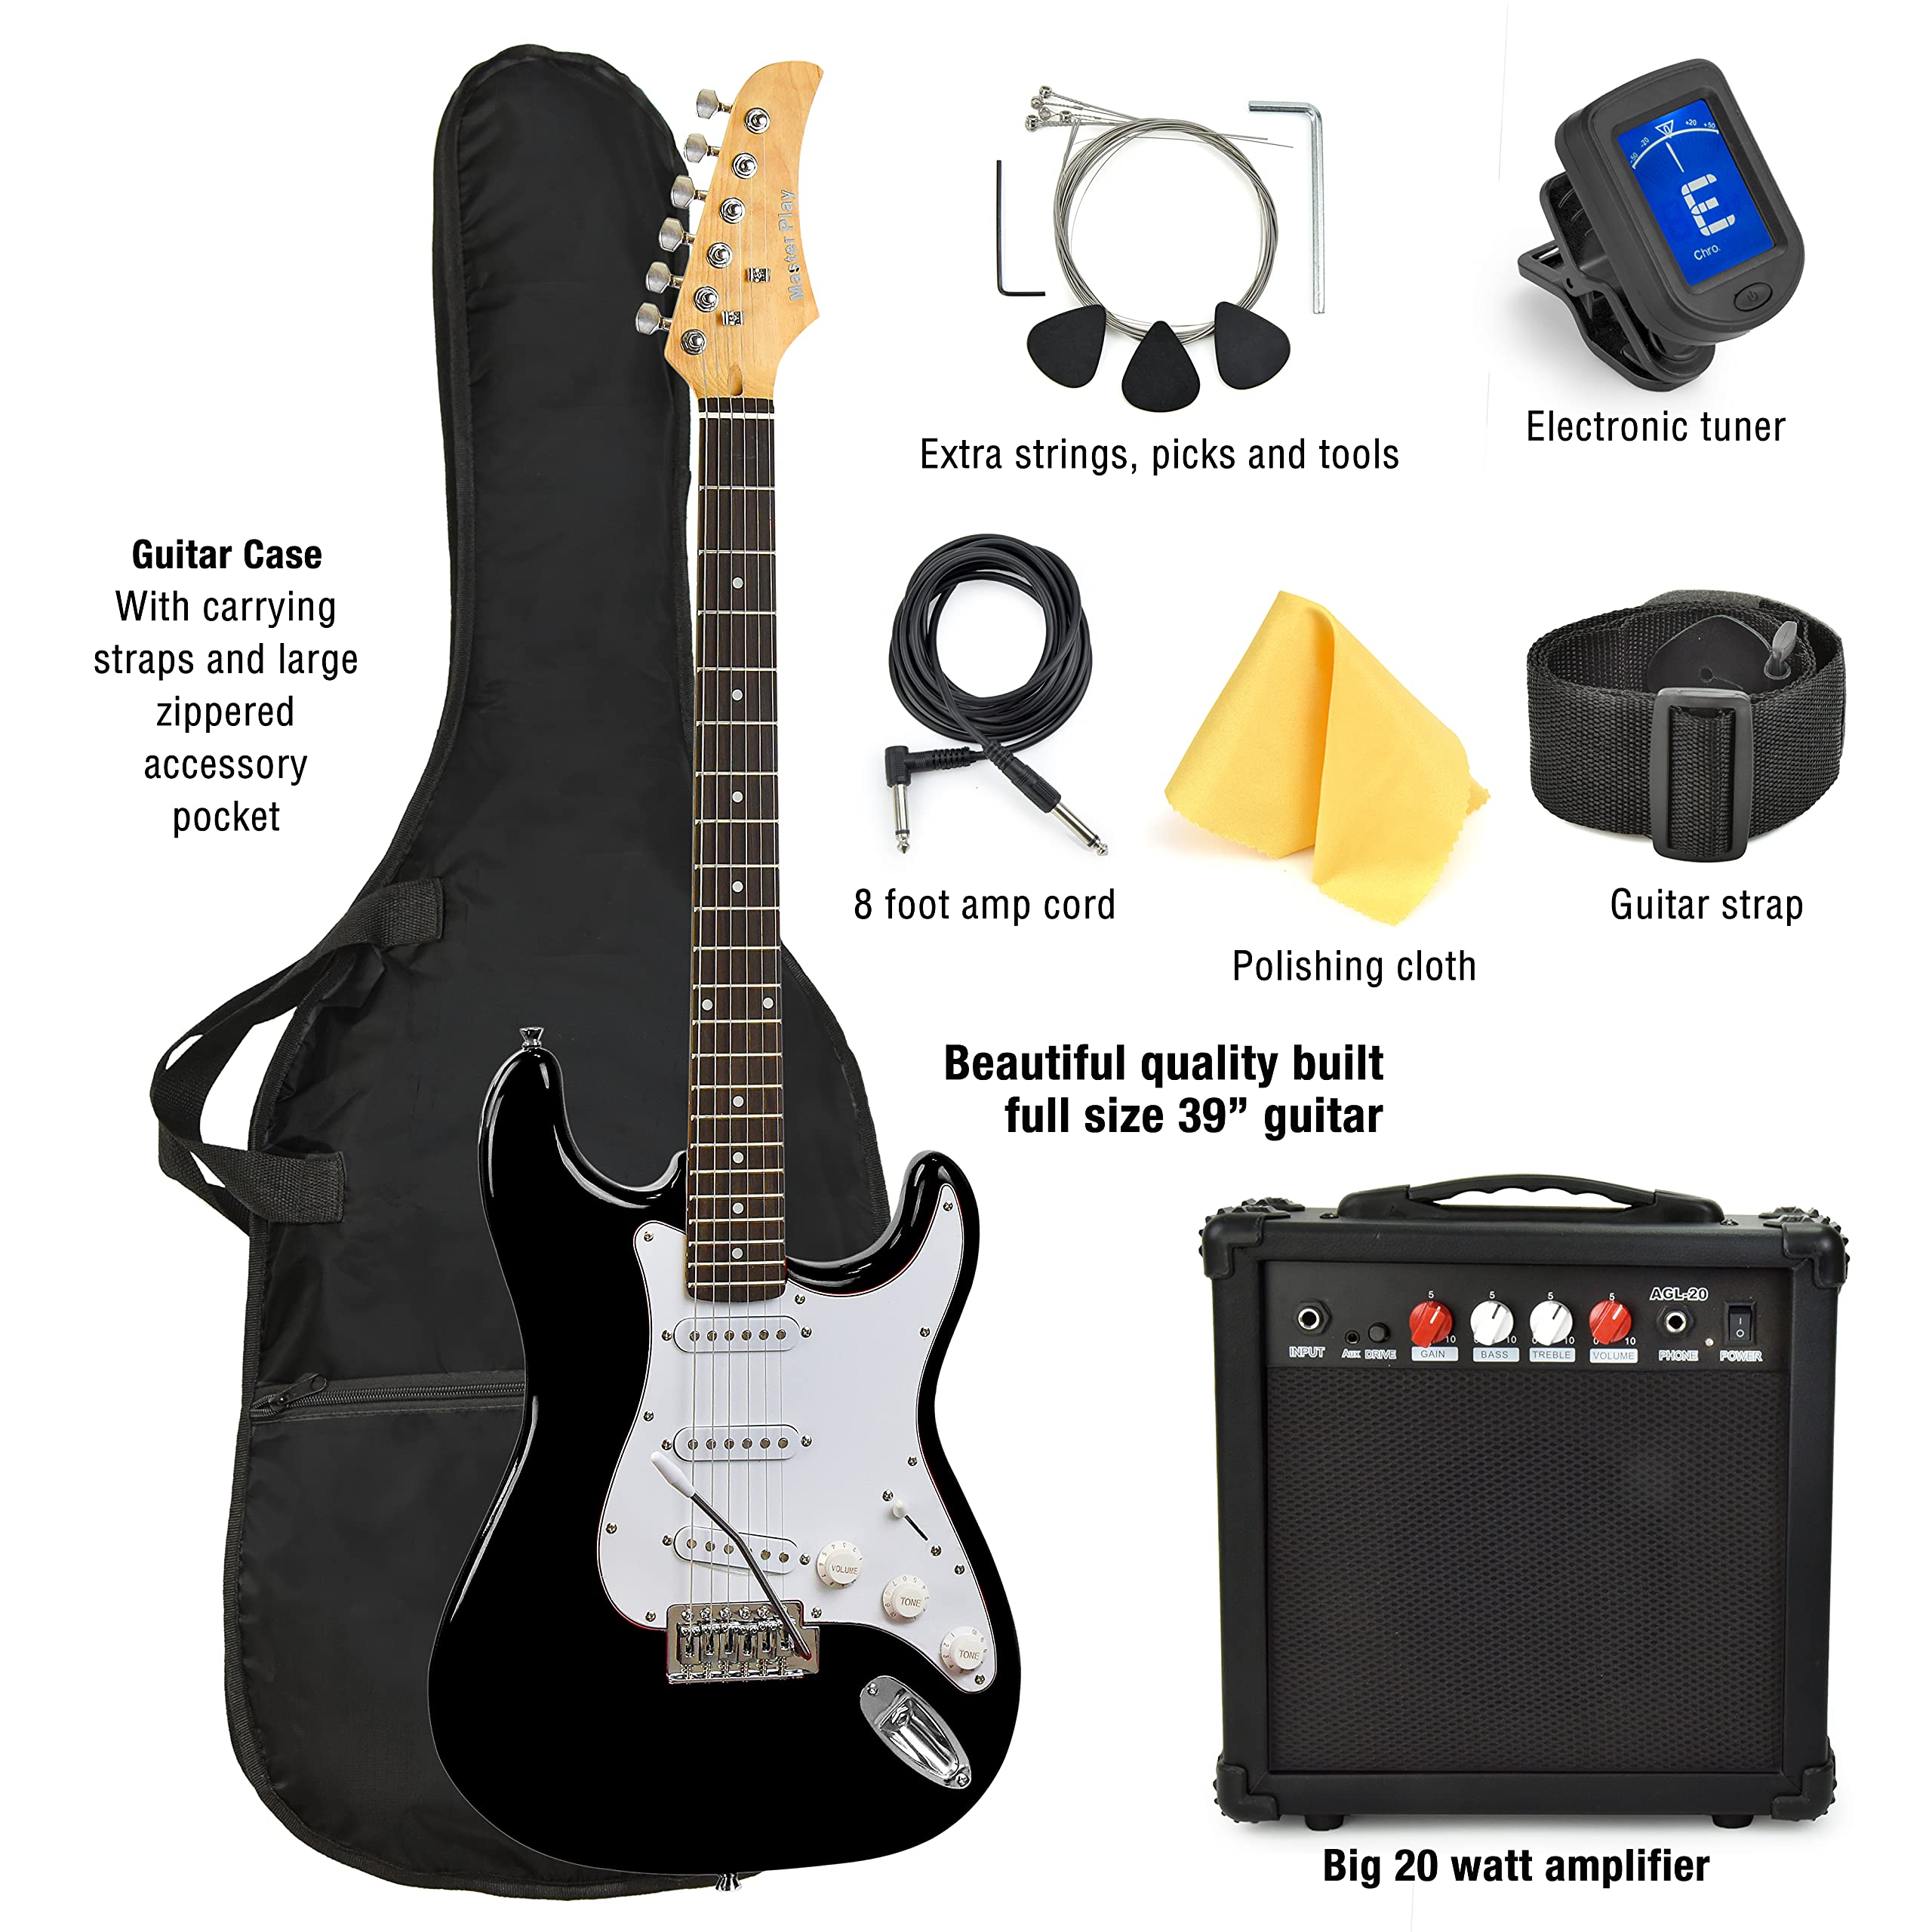 Master Play 39 Inch Electric Guitar,For Kids/beginner With Complete Starter Kit, 20 Watt Amp, 6 Extra String, Picks, Gig Bag, Shoulder Strap, Digital tuner, Cable, Wash Cloth  - Like New